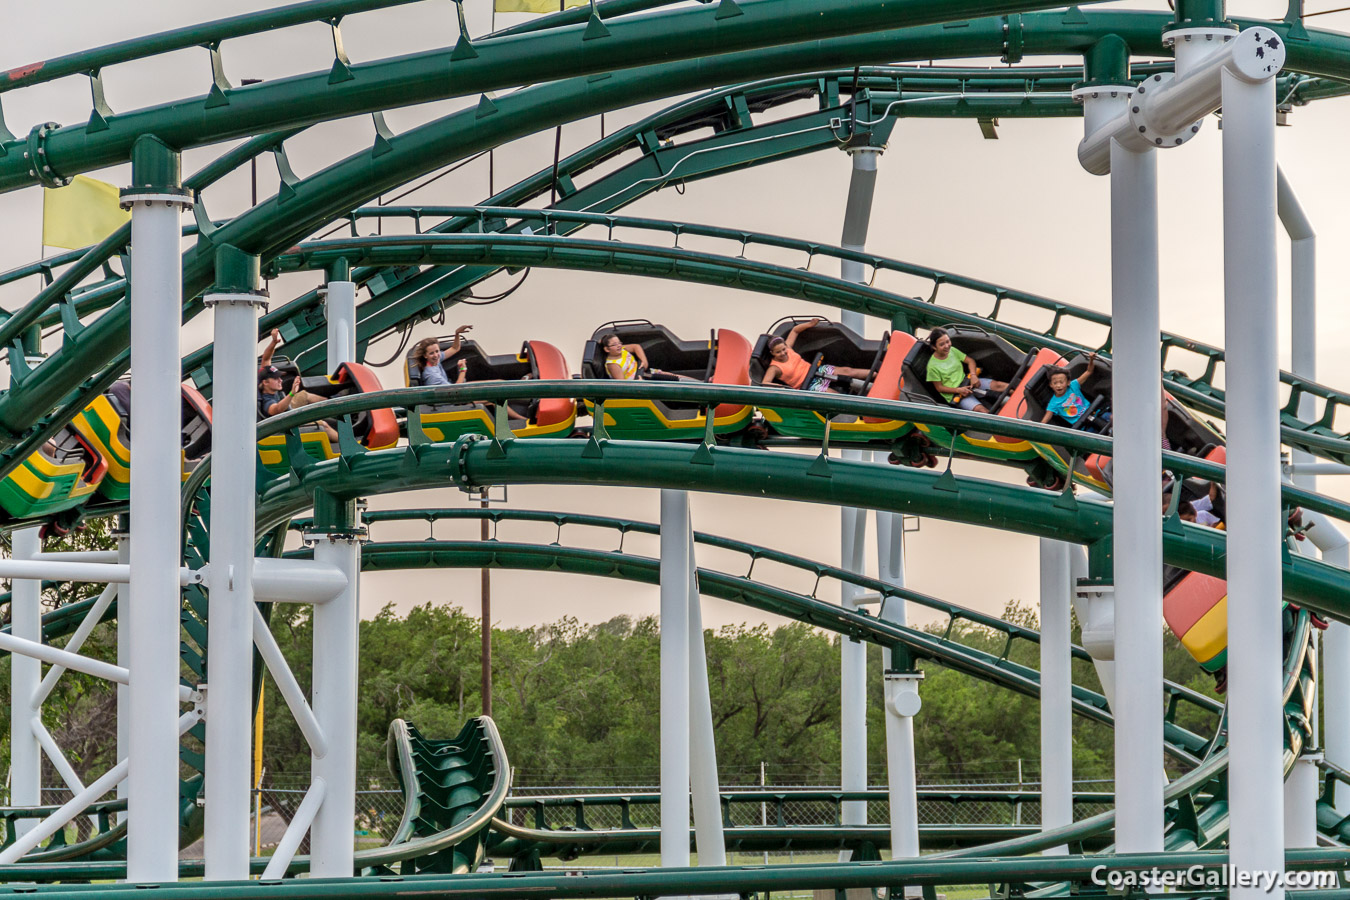 Train on the Hornet roller coaster at the Wonderland amusement park